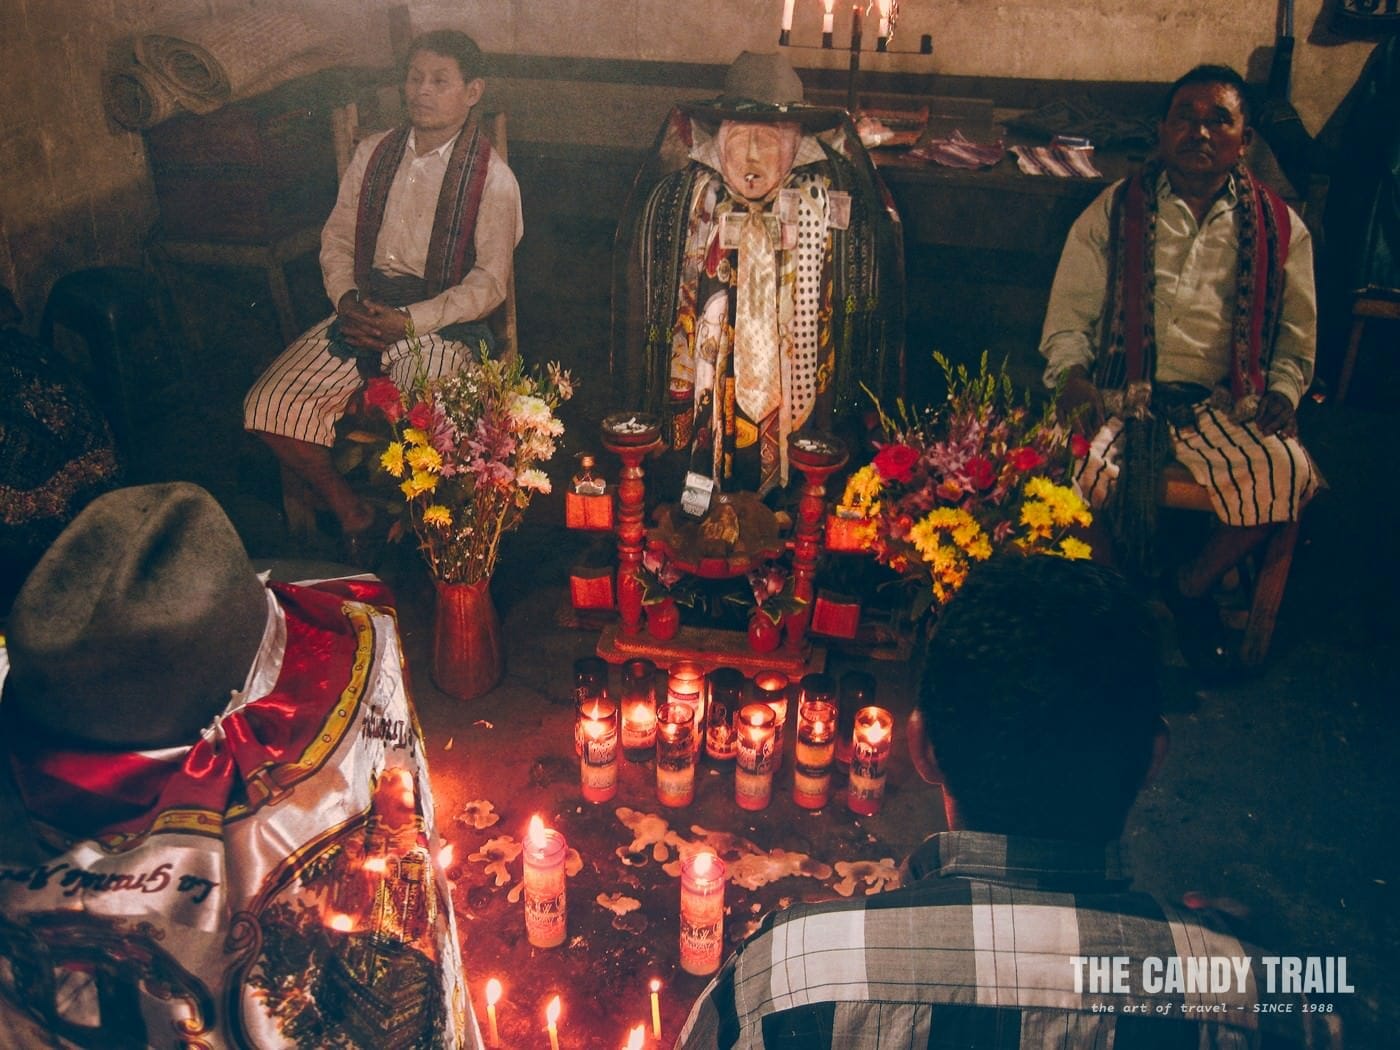 shrine of maya god Maximón and maya ceremony at Santiago Atitlán in Guatemala